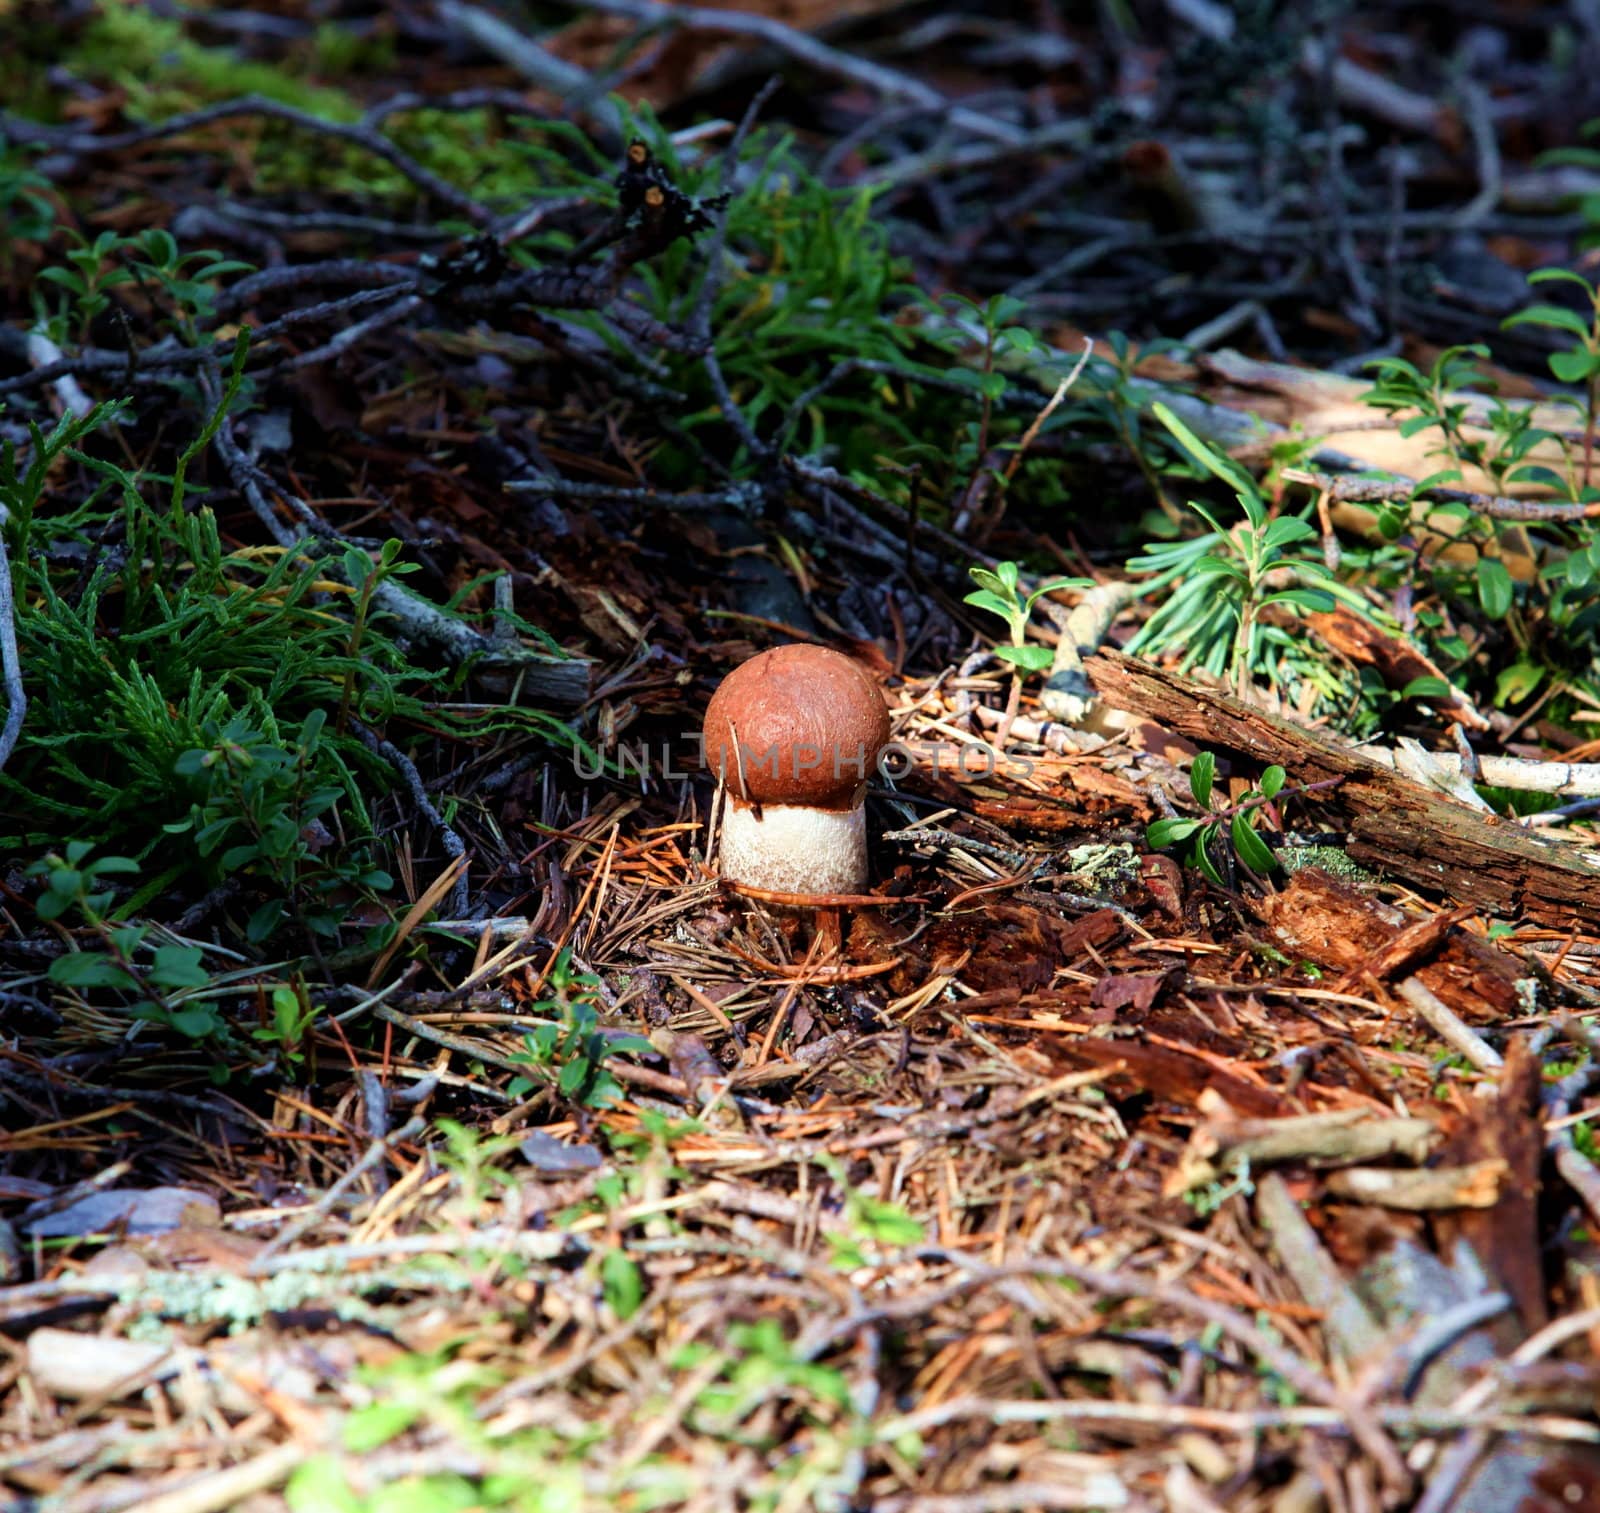 We find mushrooms